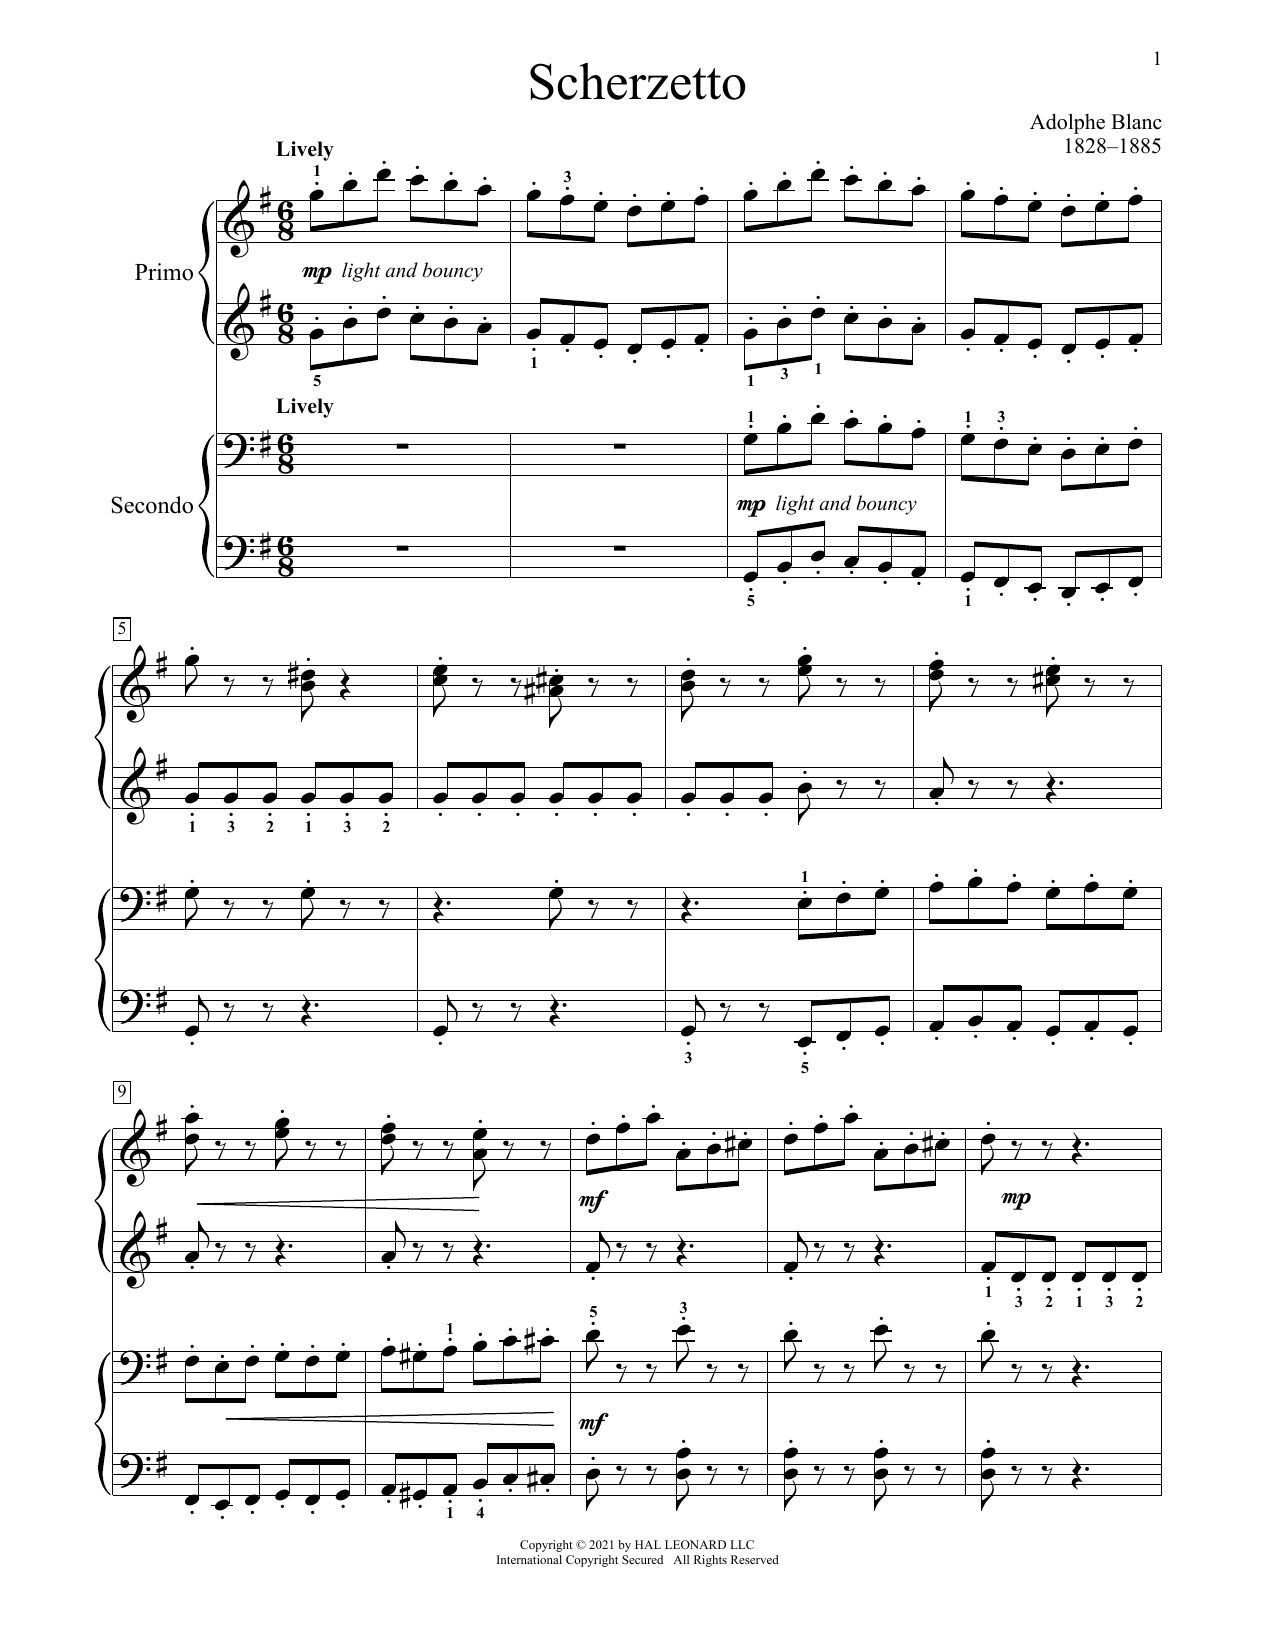 Adolphe Blanc Scherzetto sheet music notes and chords. Download Printable PDF.